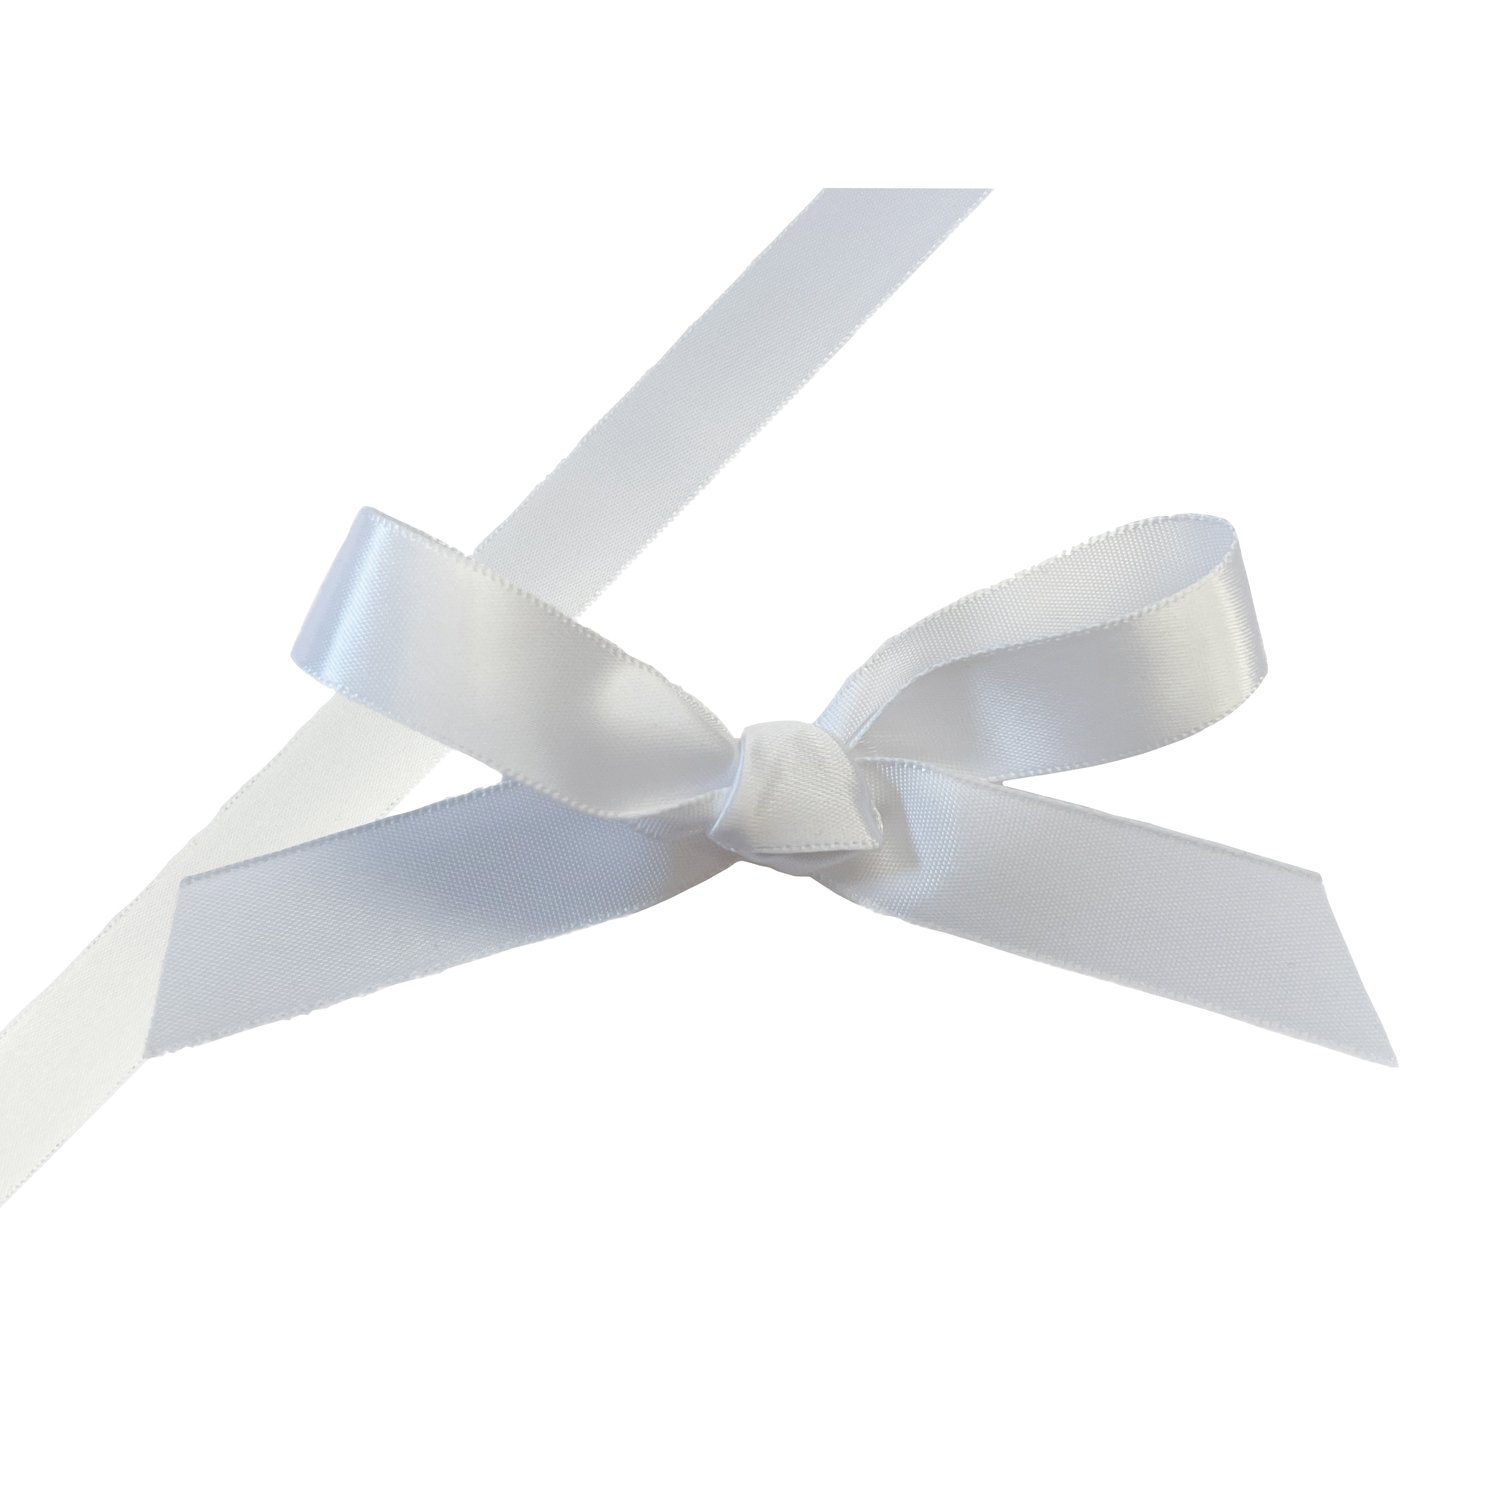 White single faced satin ribbon - 15mmx100m